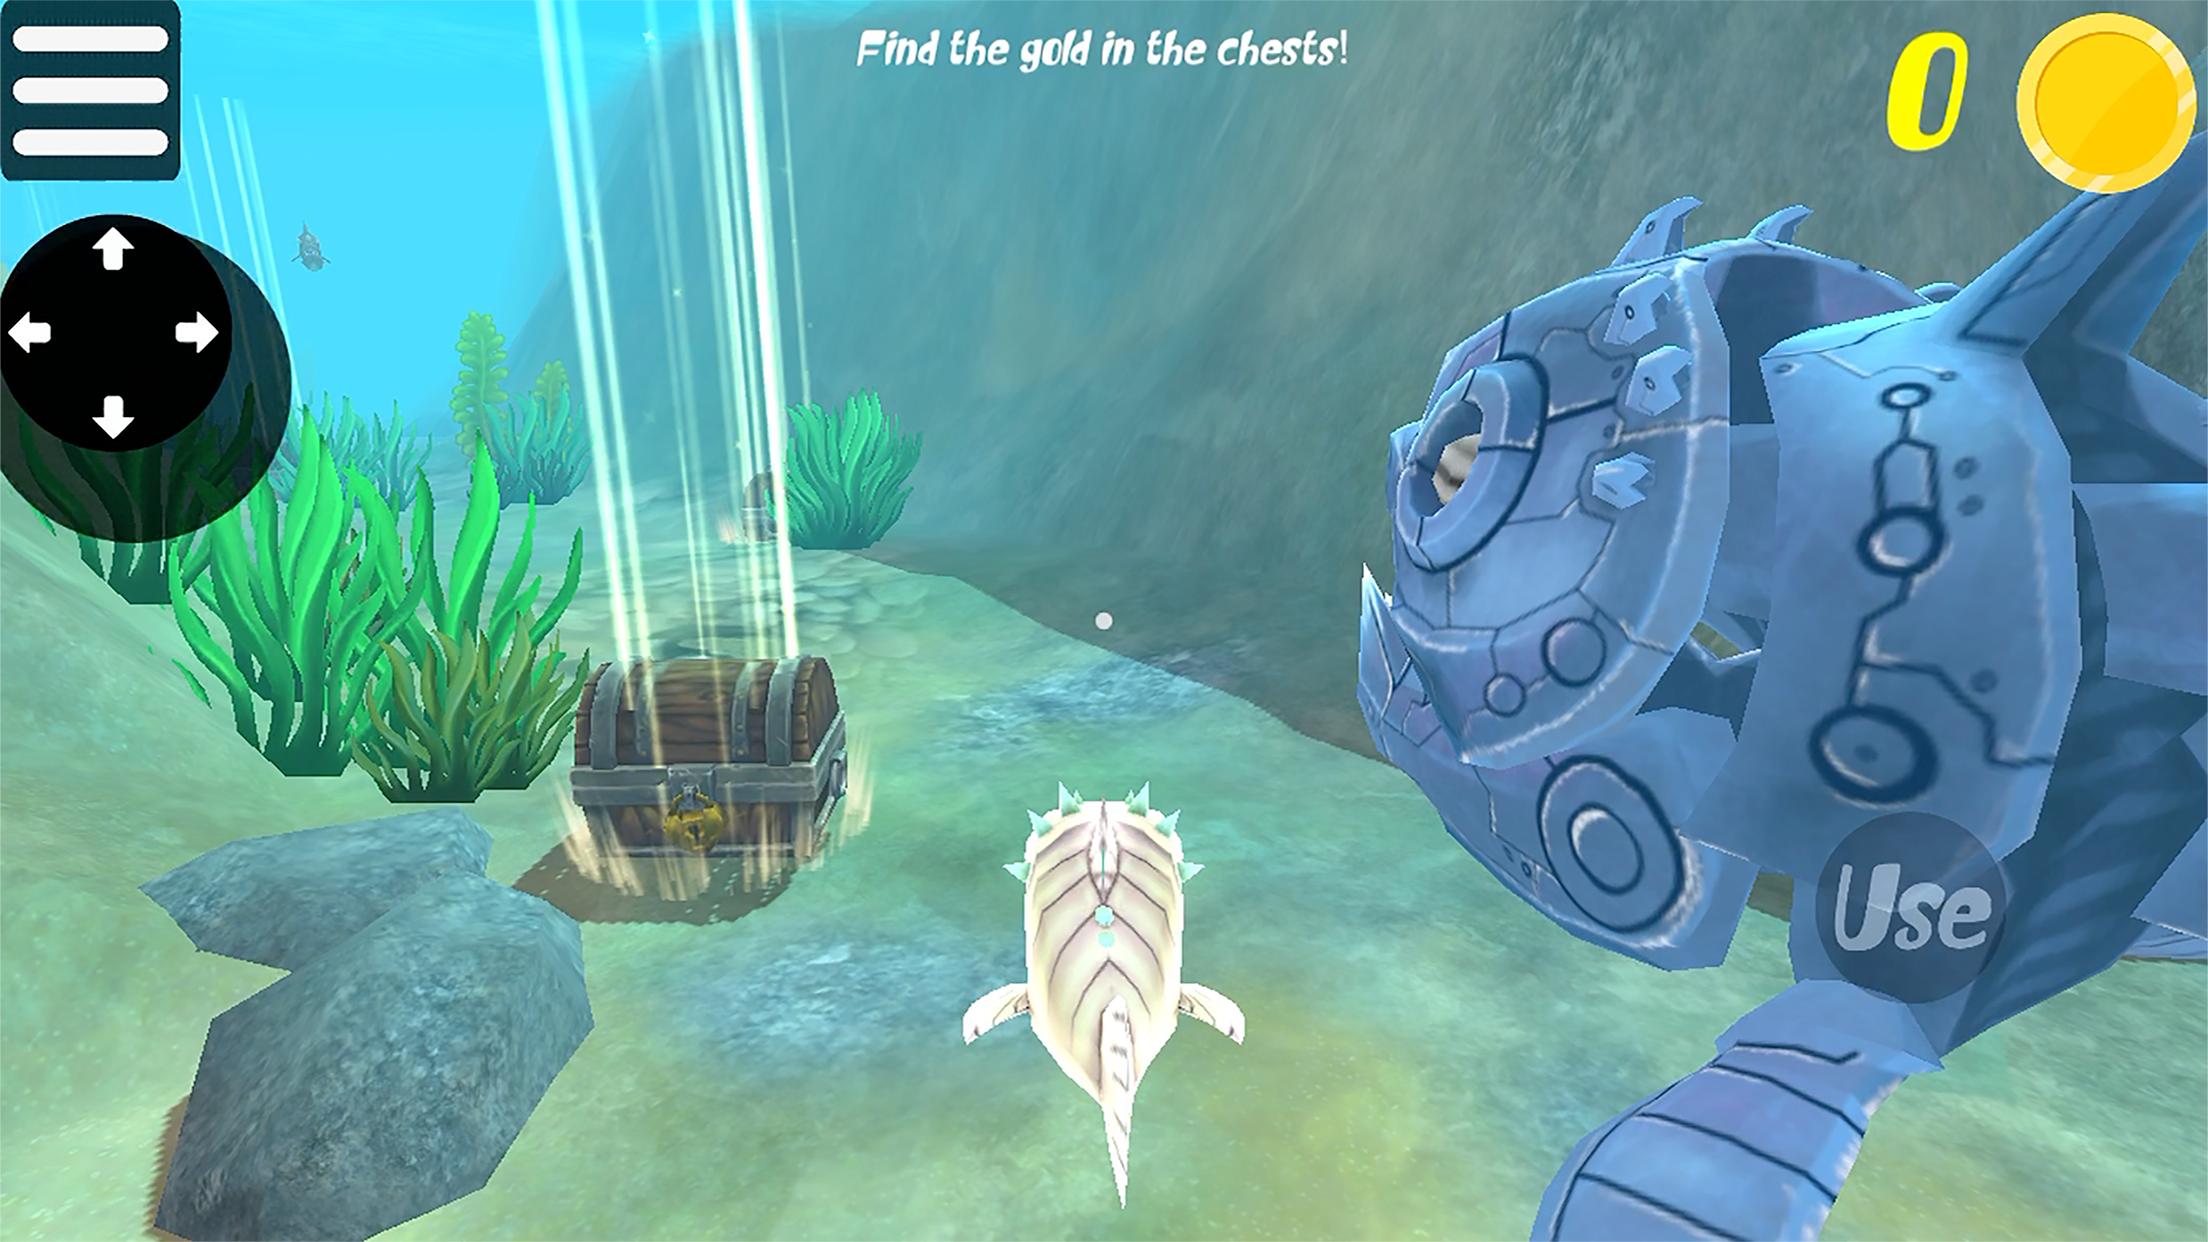 Gun Game Mod  Feed and Grow: Fish! 